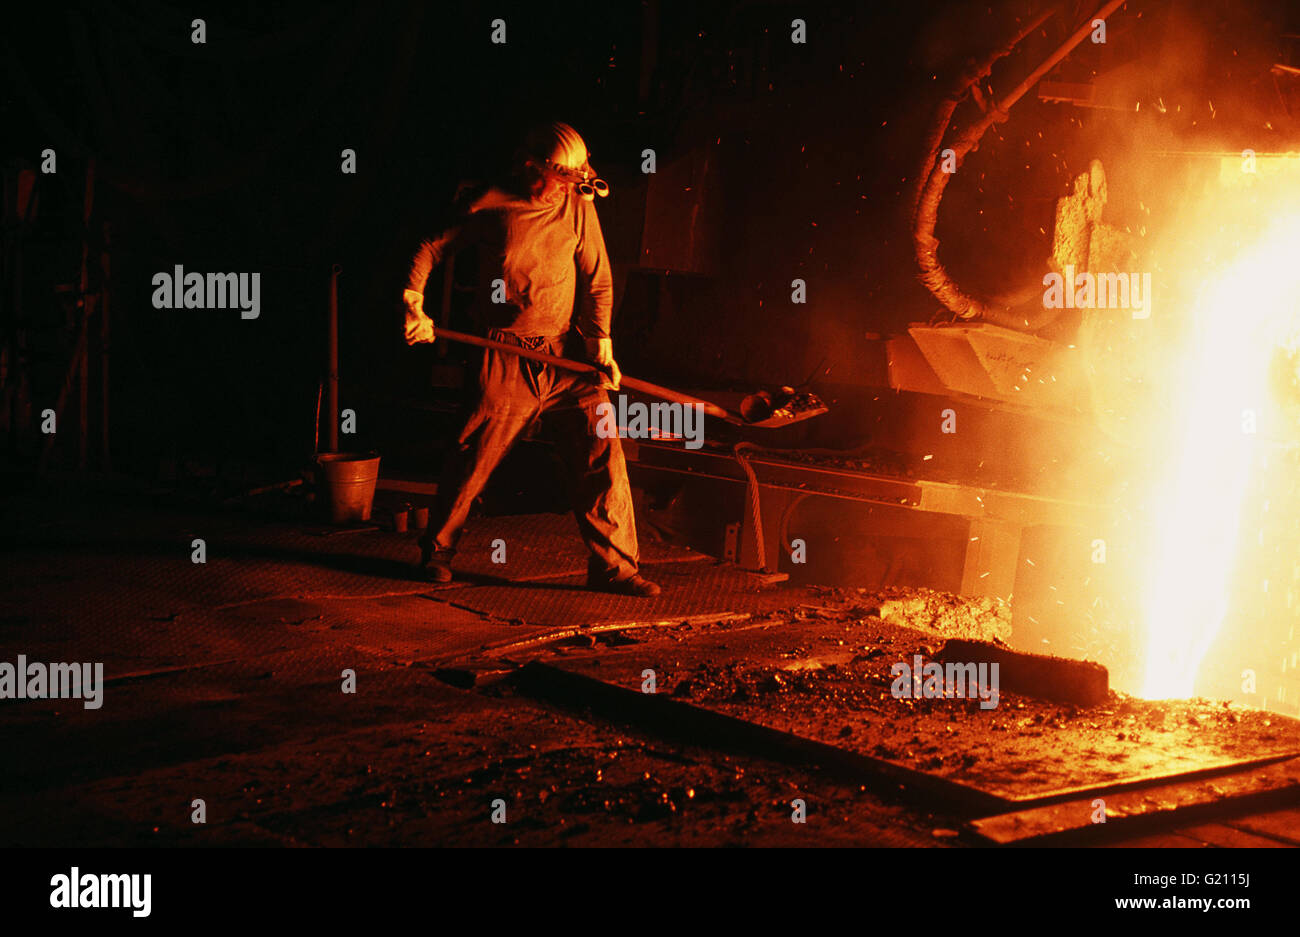 Germany - Velbert, Krupp steel production. Worker wearing protective gear operates near kiln with molten steel Stock Photo